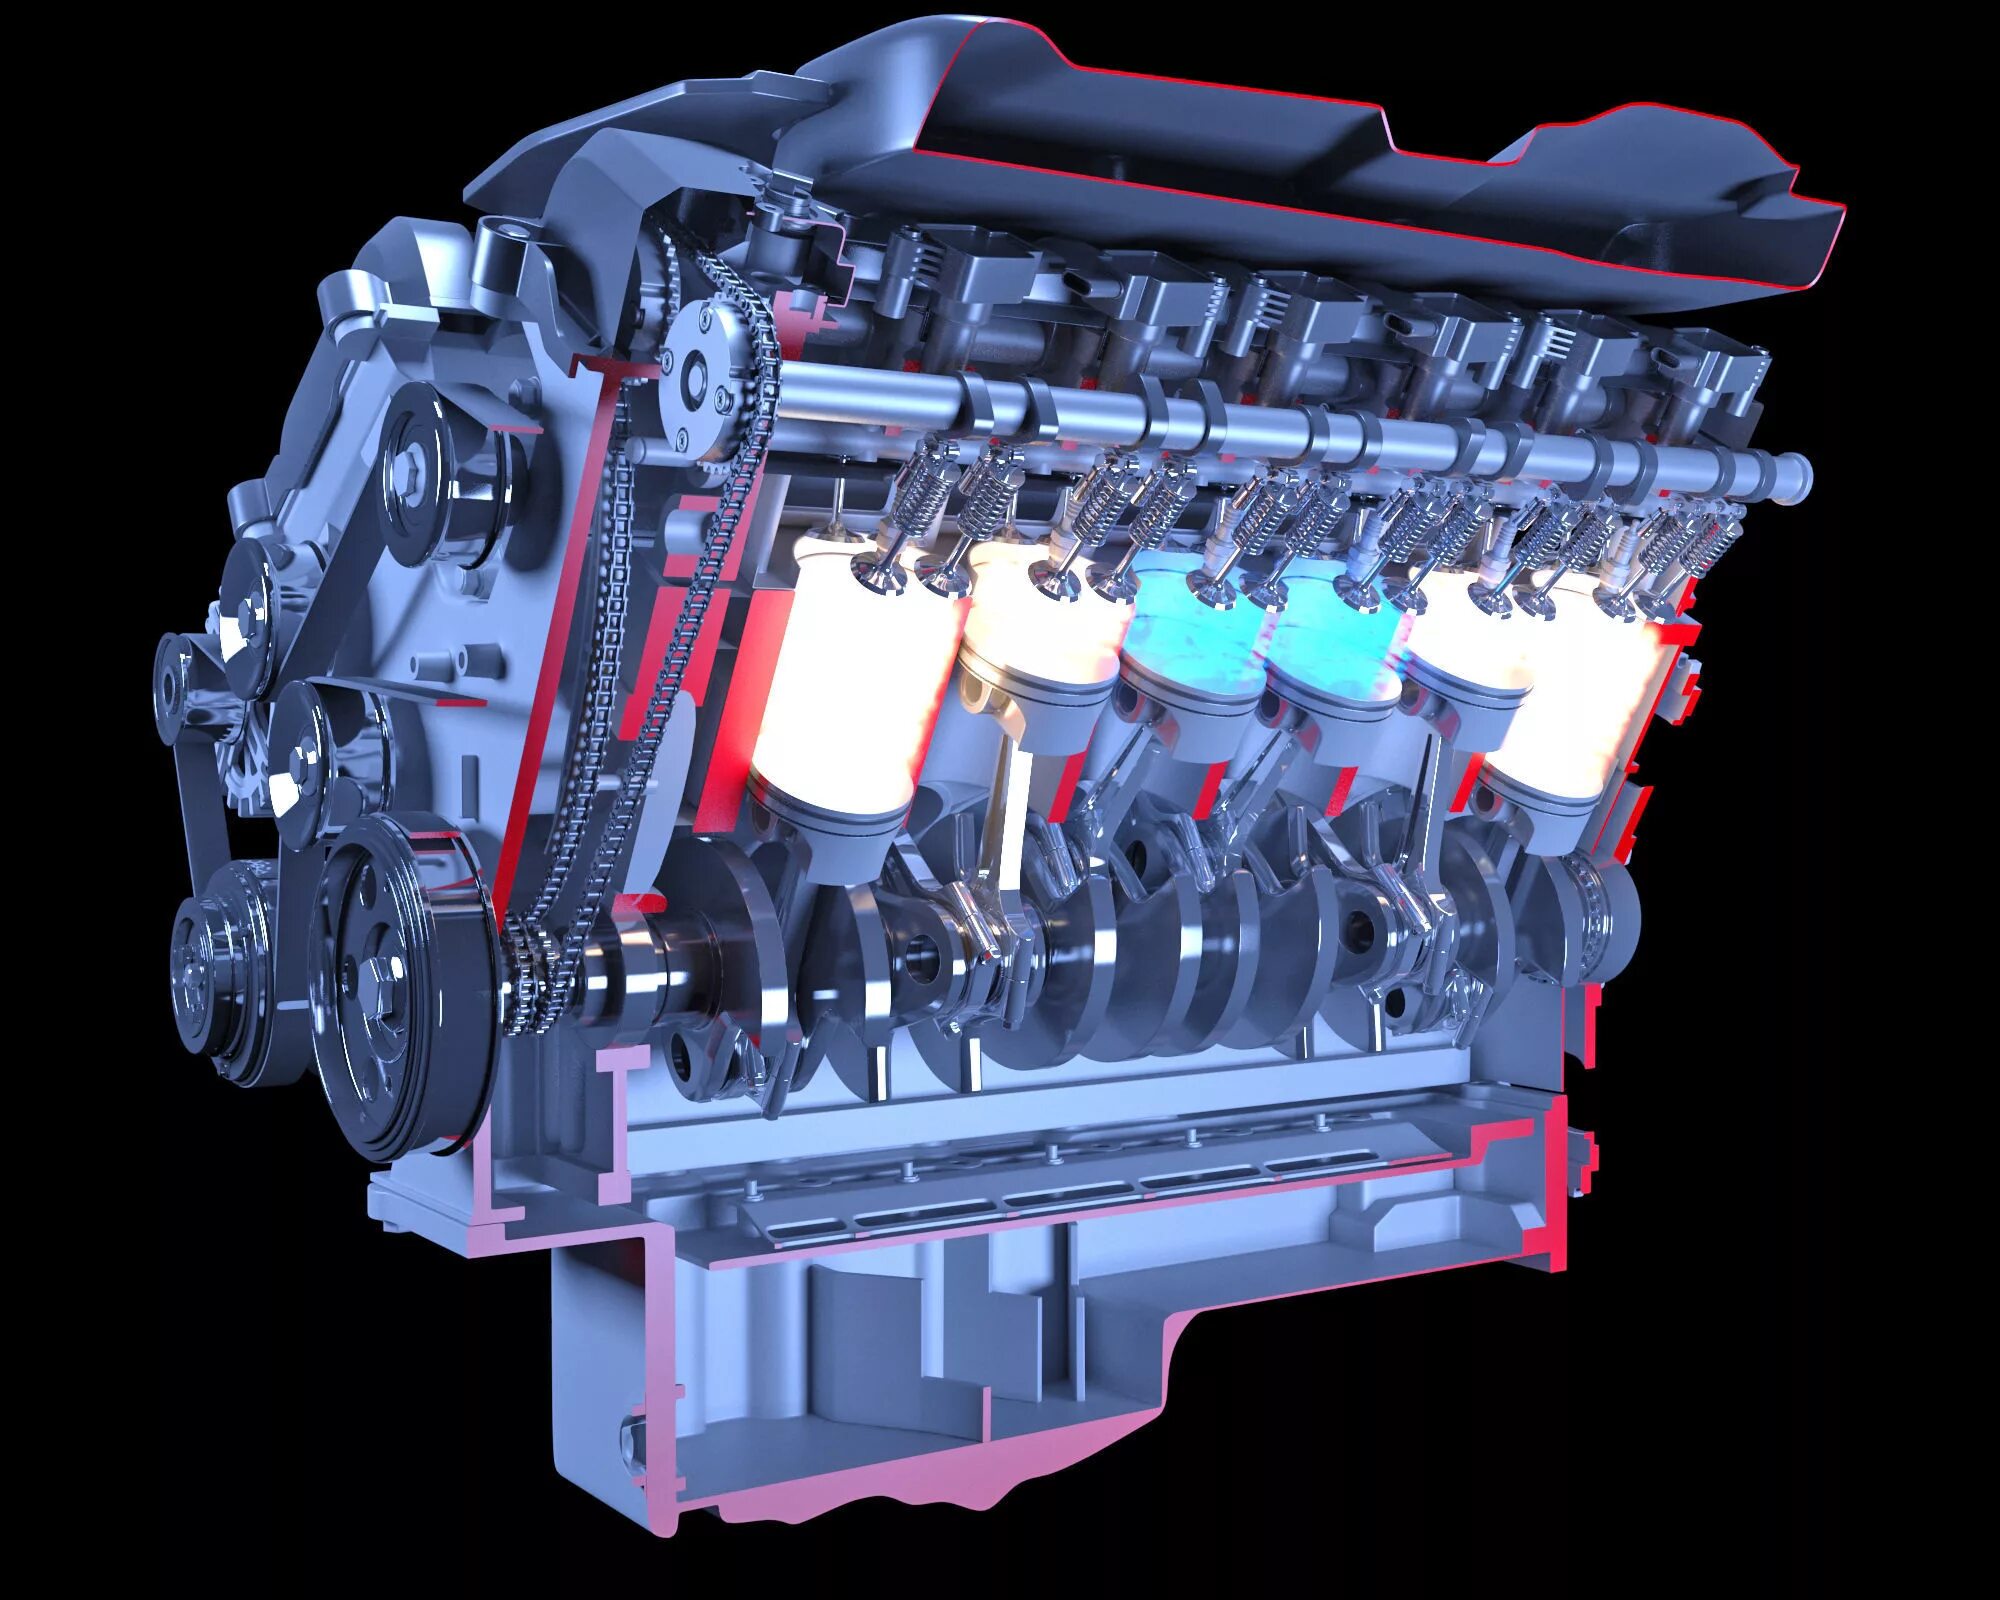 12 двиг. V12 двигатель. КАМАЗ-740 v8 engine Cutaway. V12 engine. Двигатели v12 DAF.